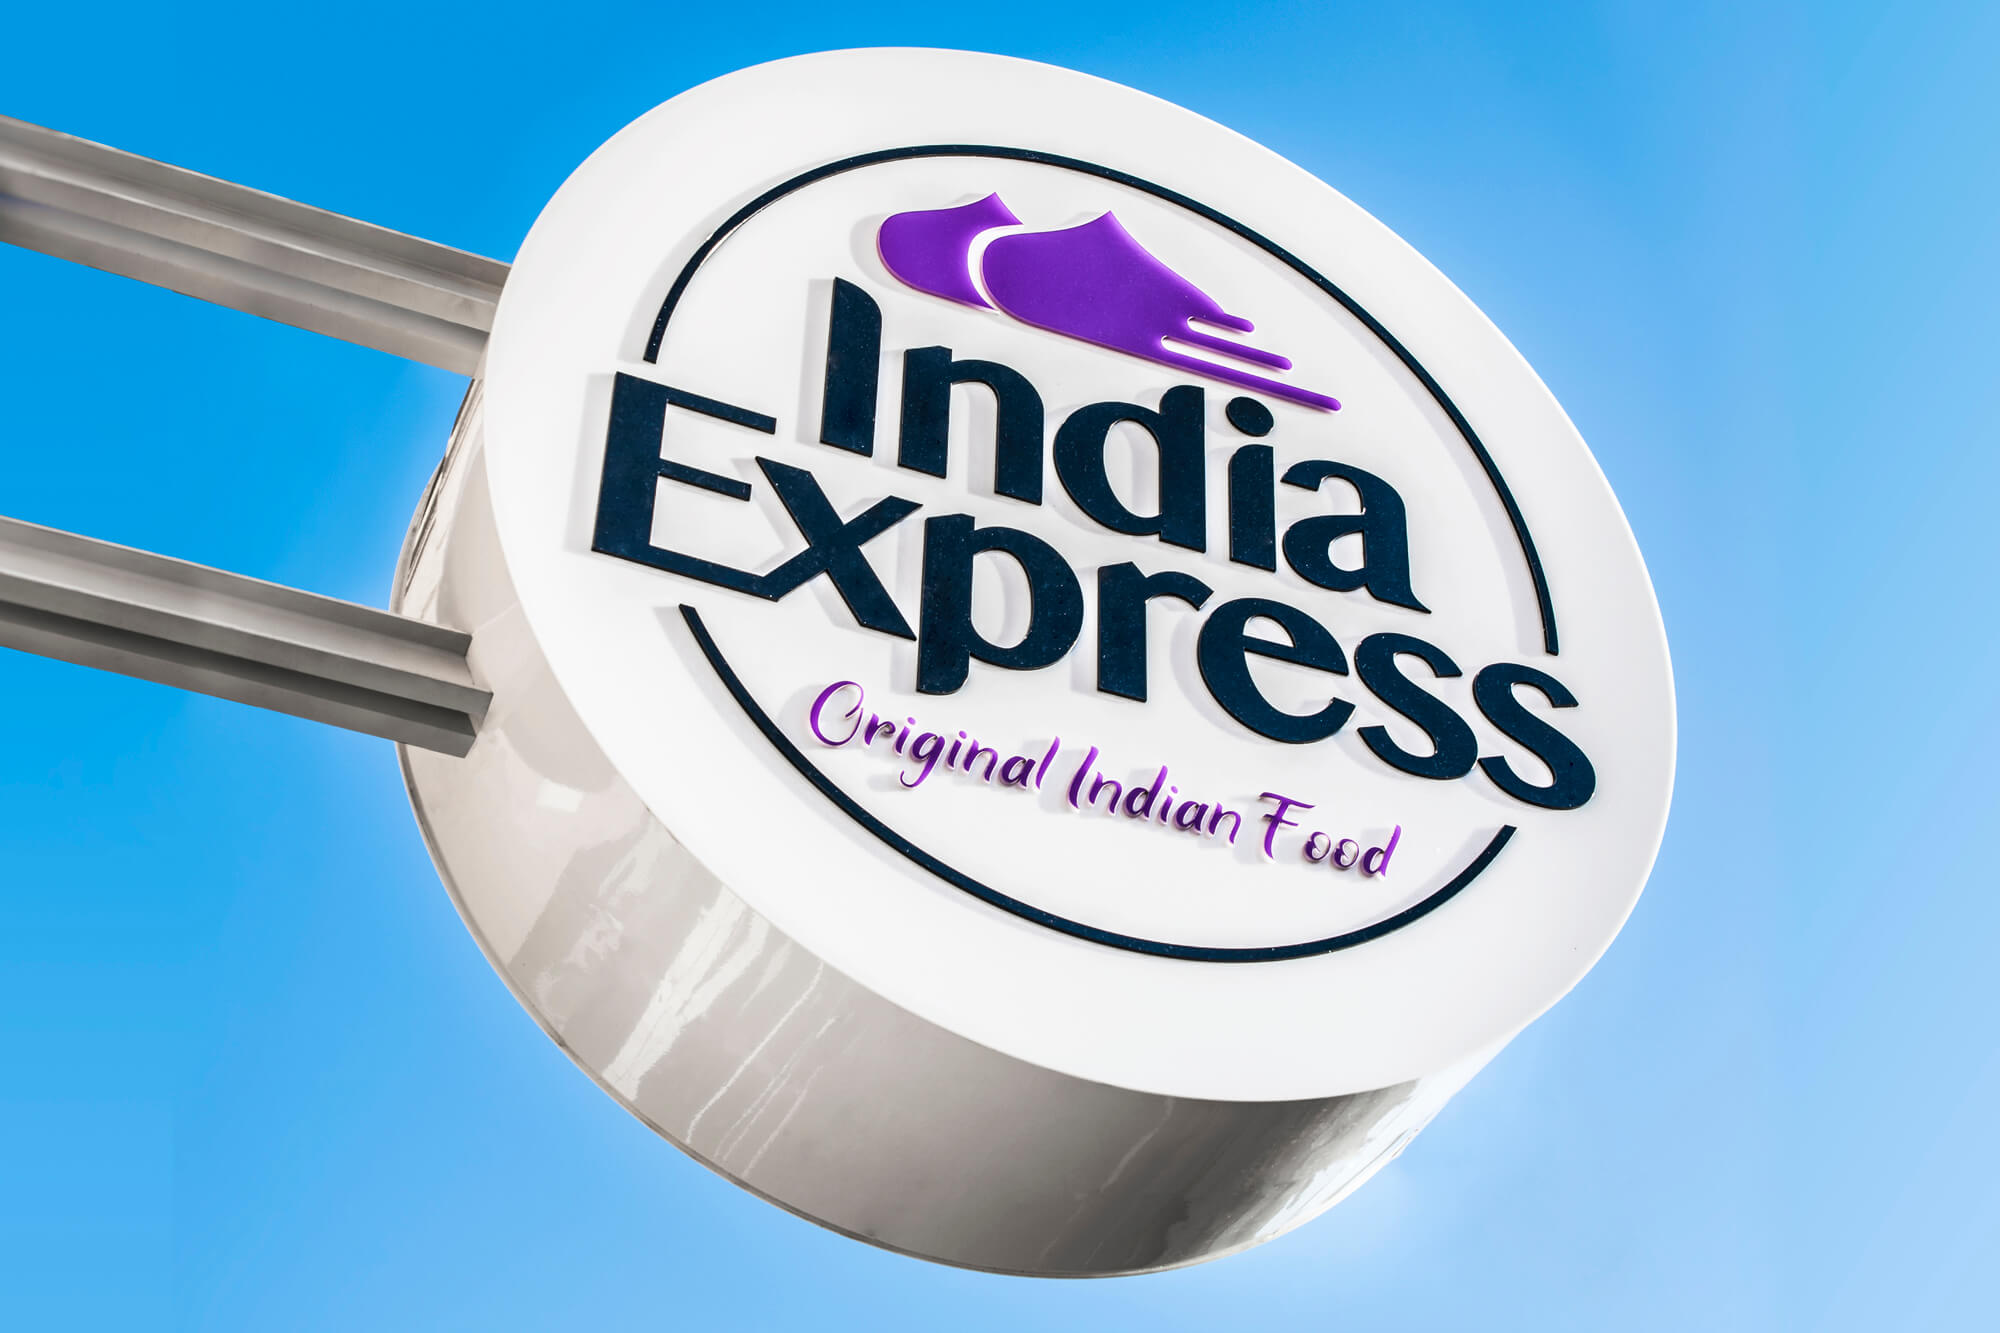 Indien-Express - India Express - Firmenlogo, Werbesemaphore neben dem Eingang aufgehängt